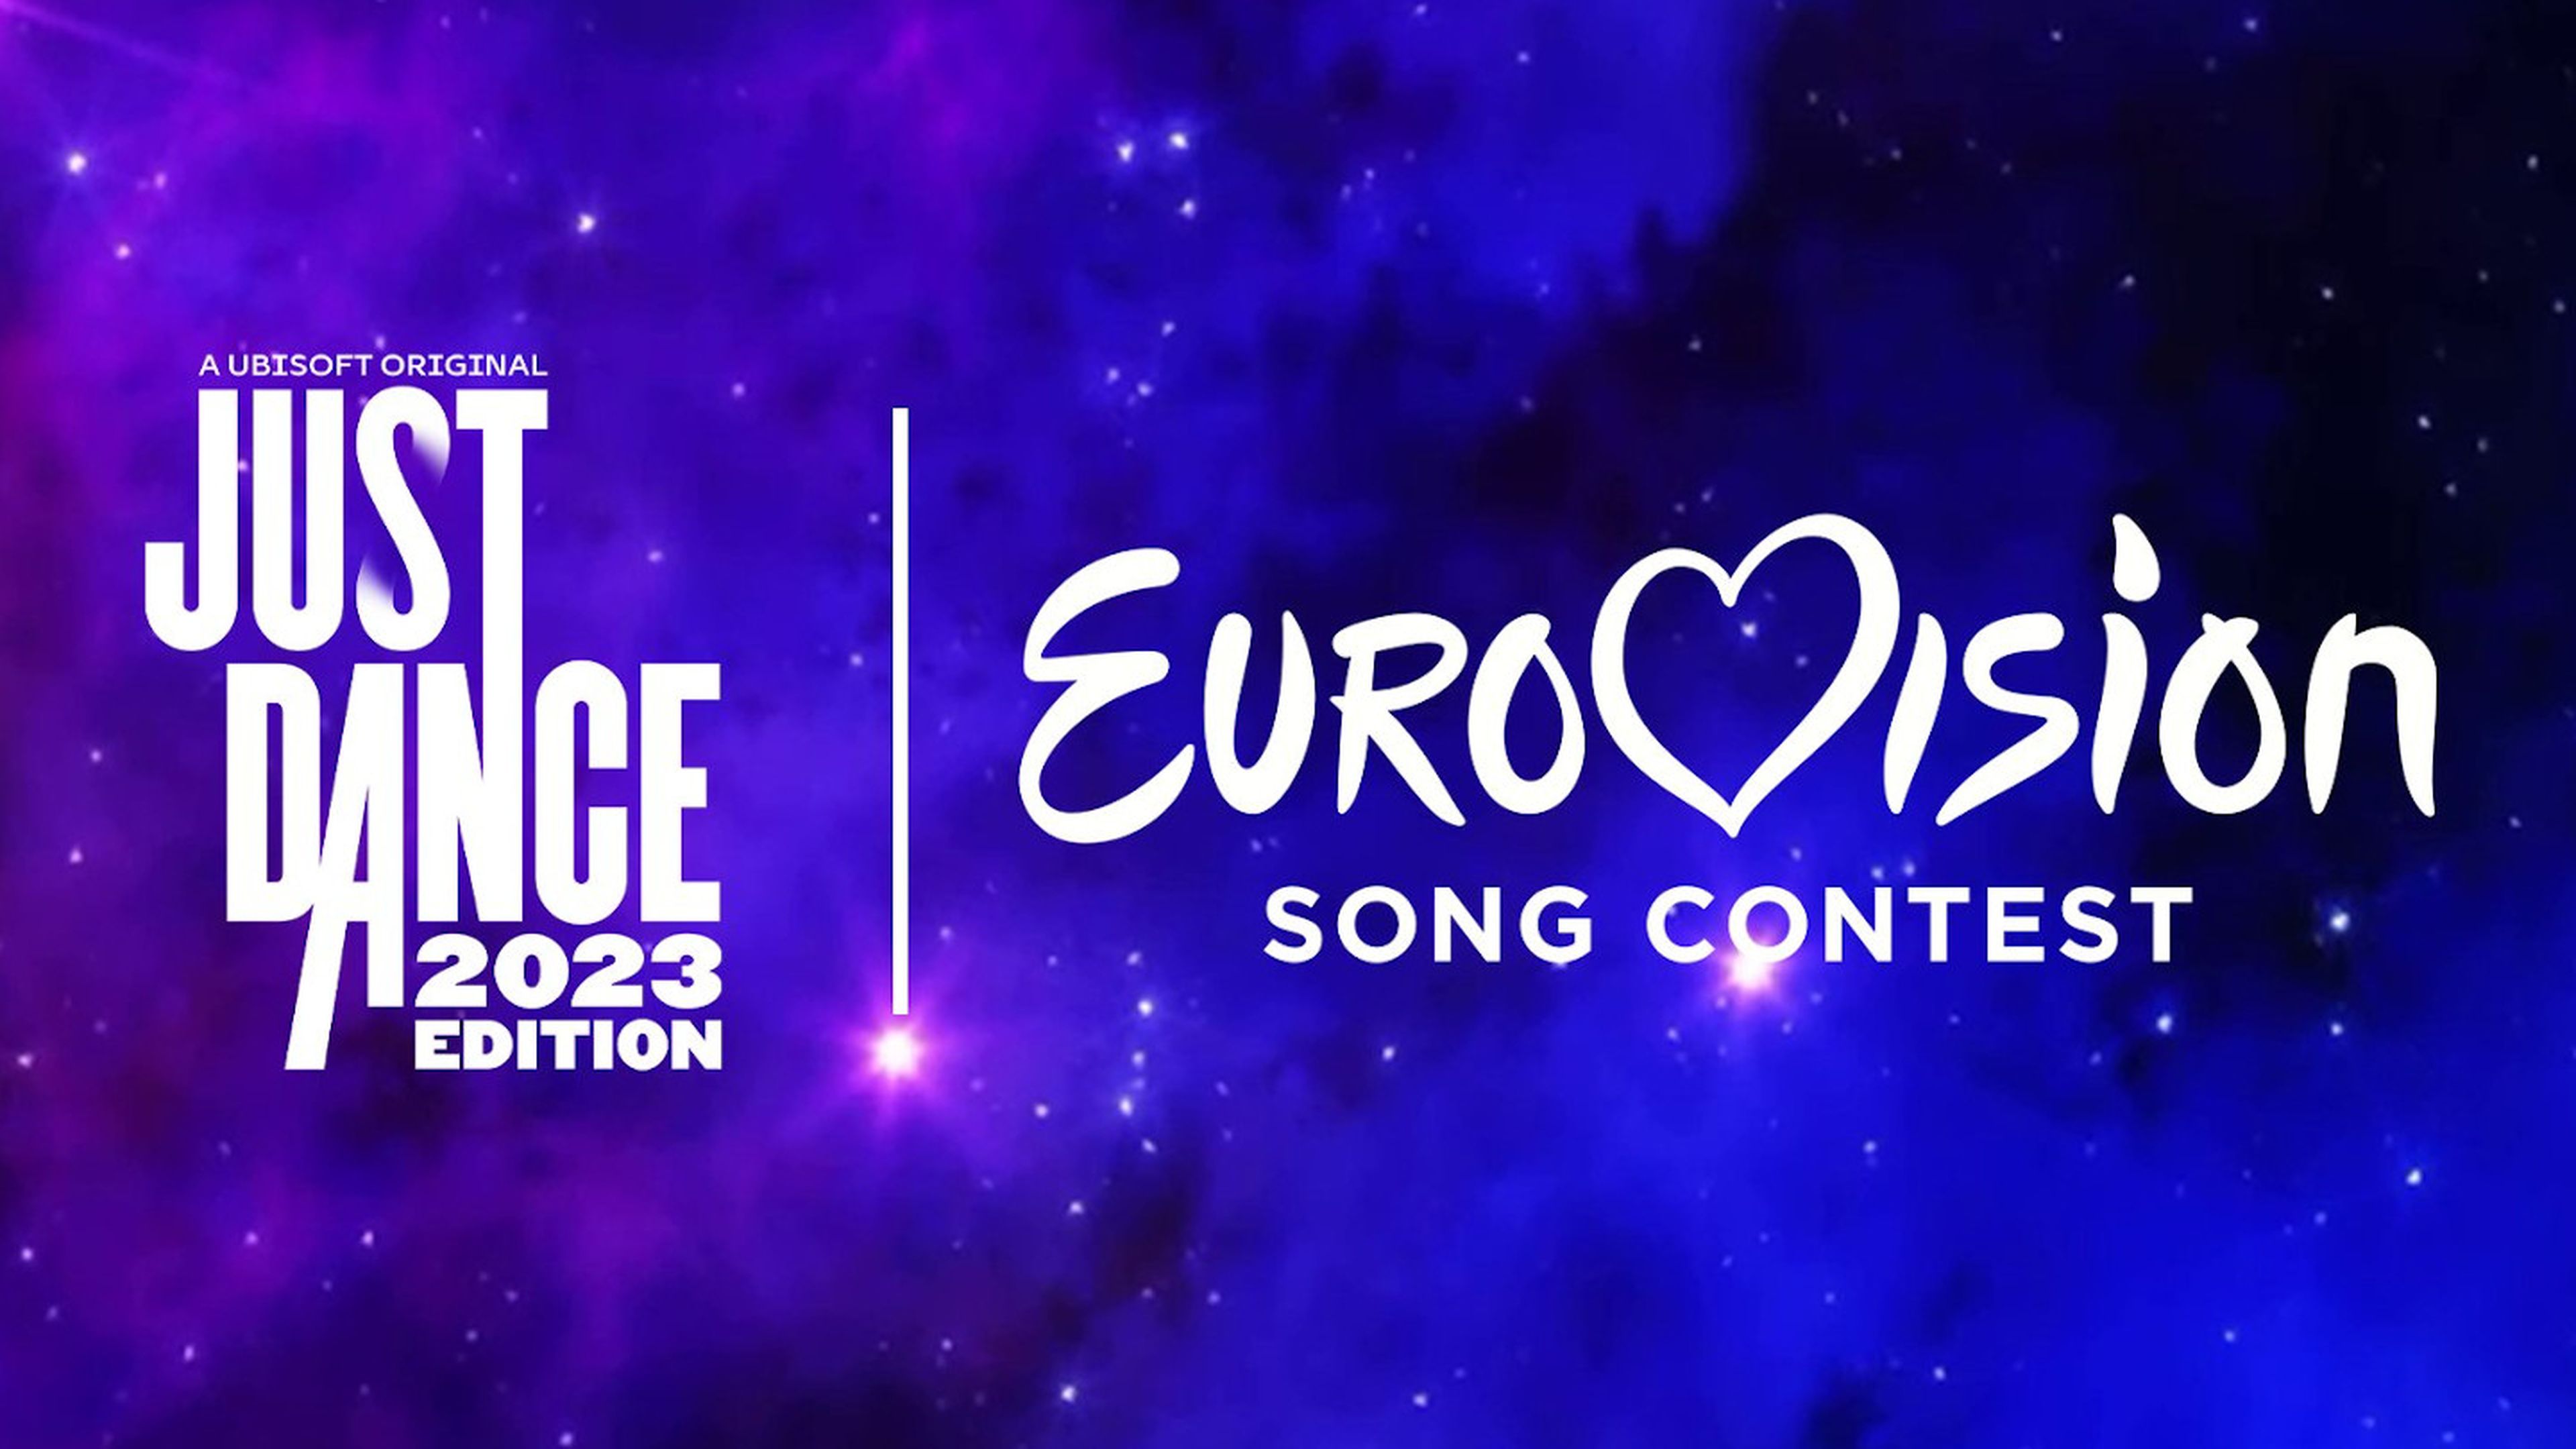 Just Dance Eurovision